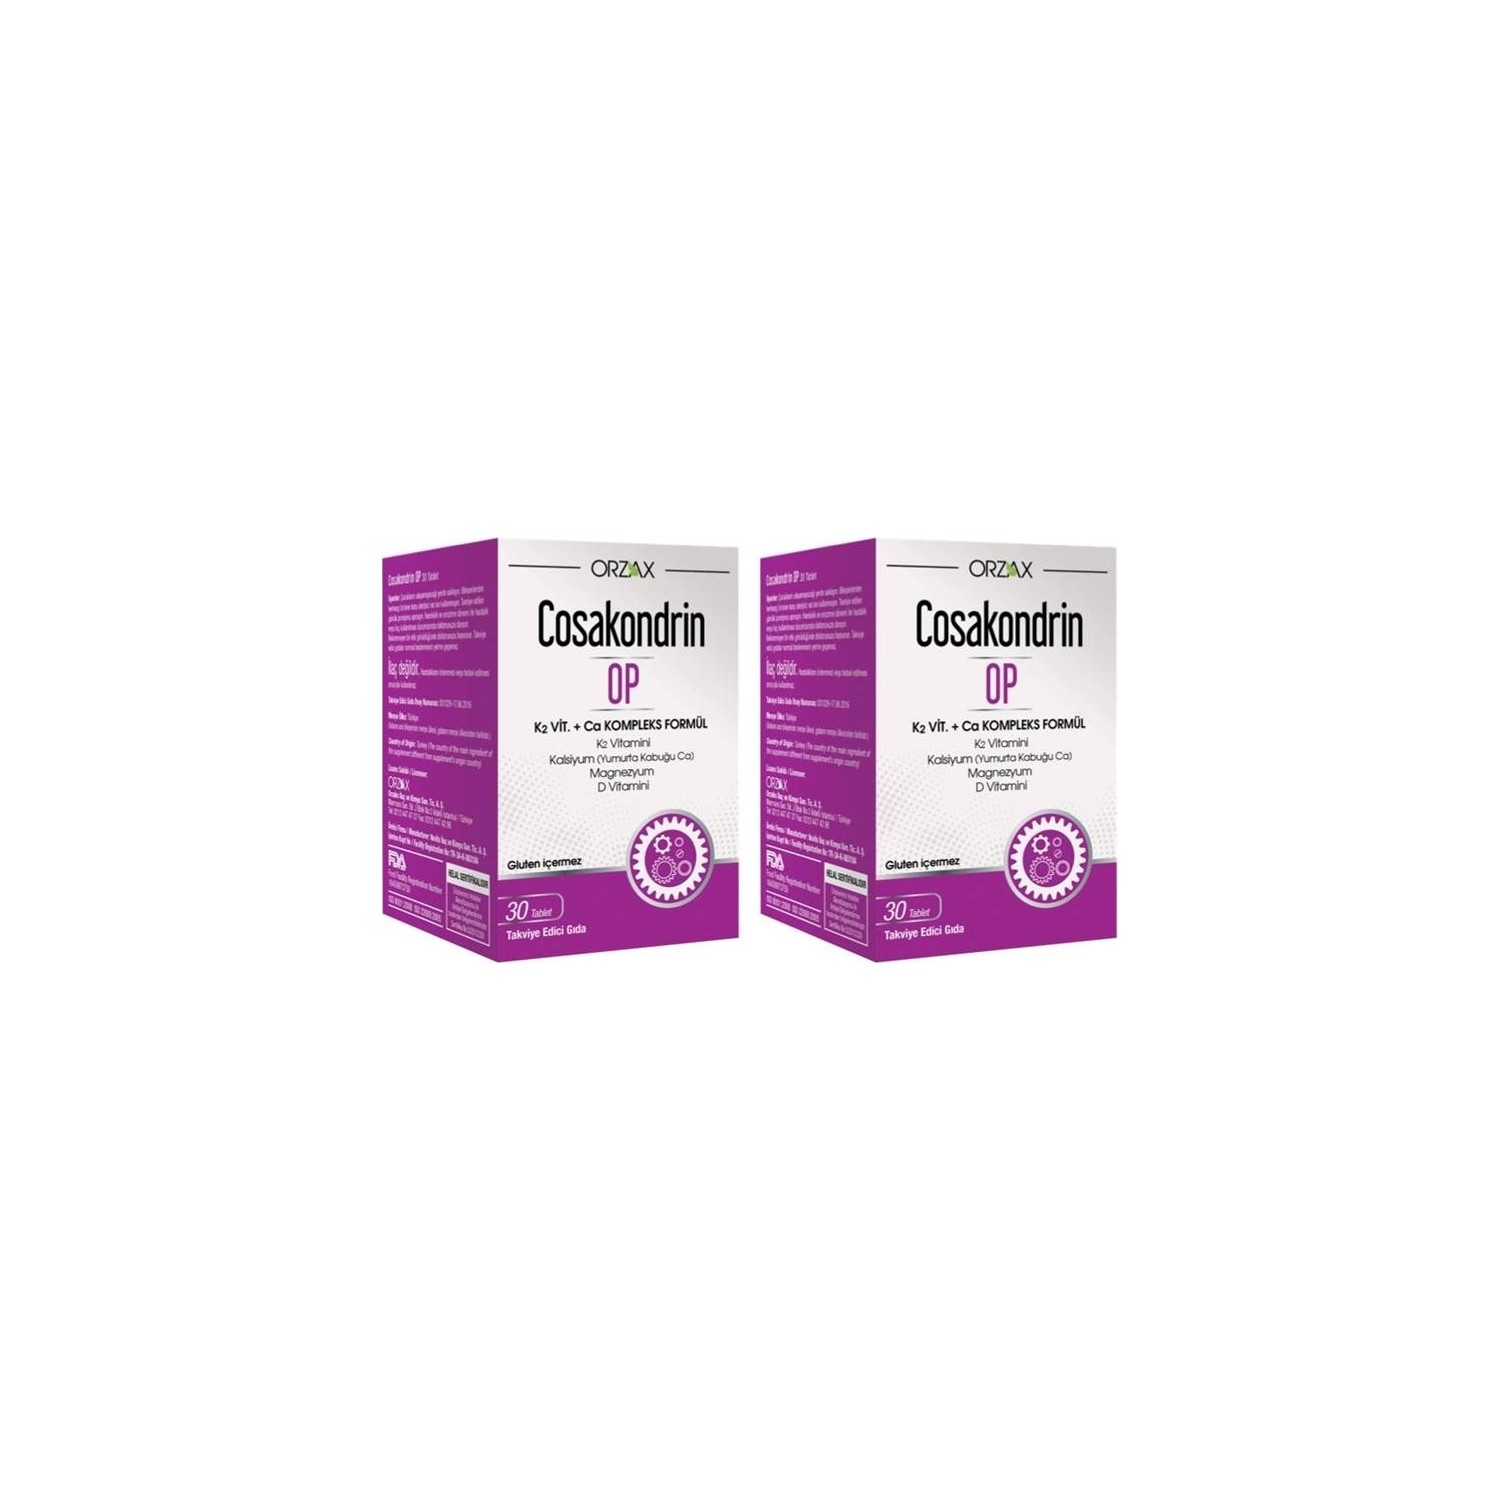 Пищевая добавка Orzax Cosakondrin Op, 2 упаковки по 30 таблеток box box box box box box box box box box box box box